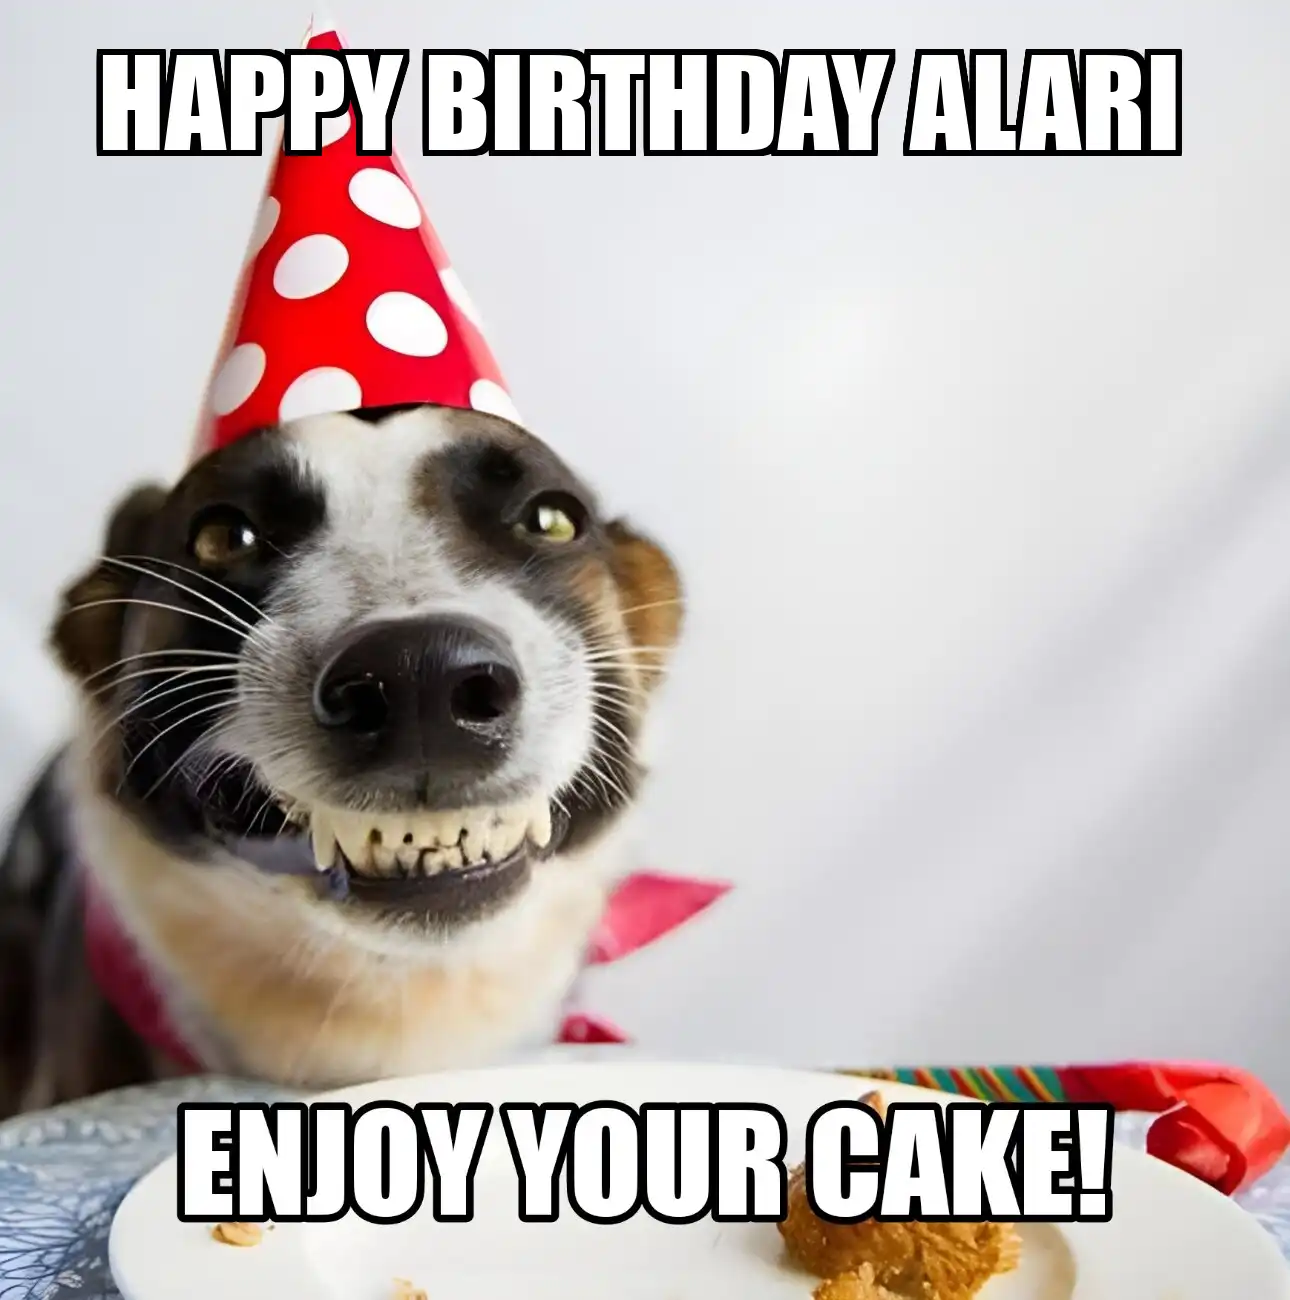 Happy Birthday Alari Enjoy Your Cake Dog Meme